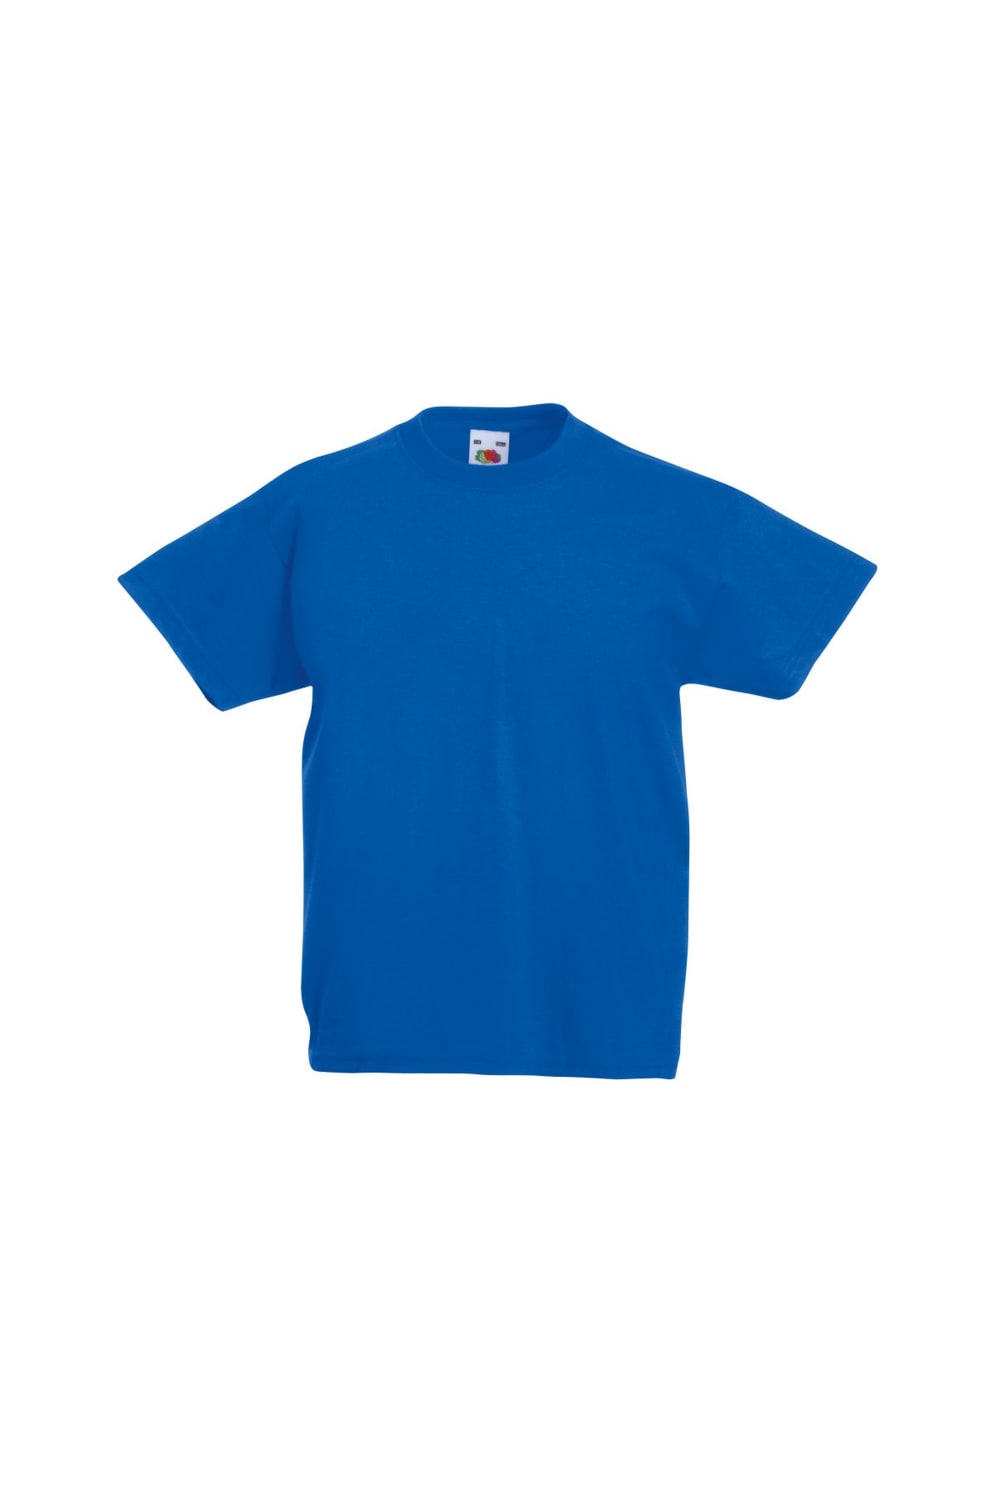 Fruit Of The Loom Childrens/Teens Original Short Sleeve T-Shirt (Royal Blue)